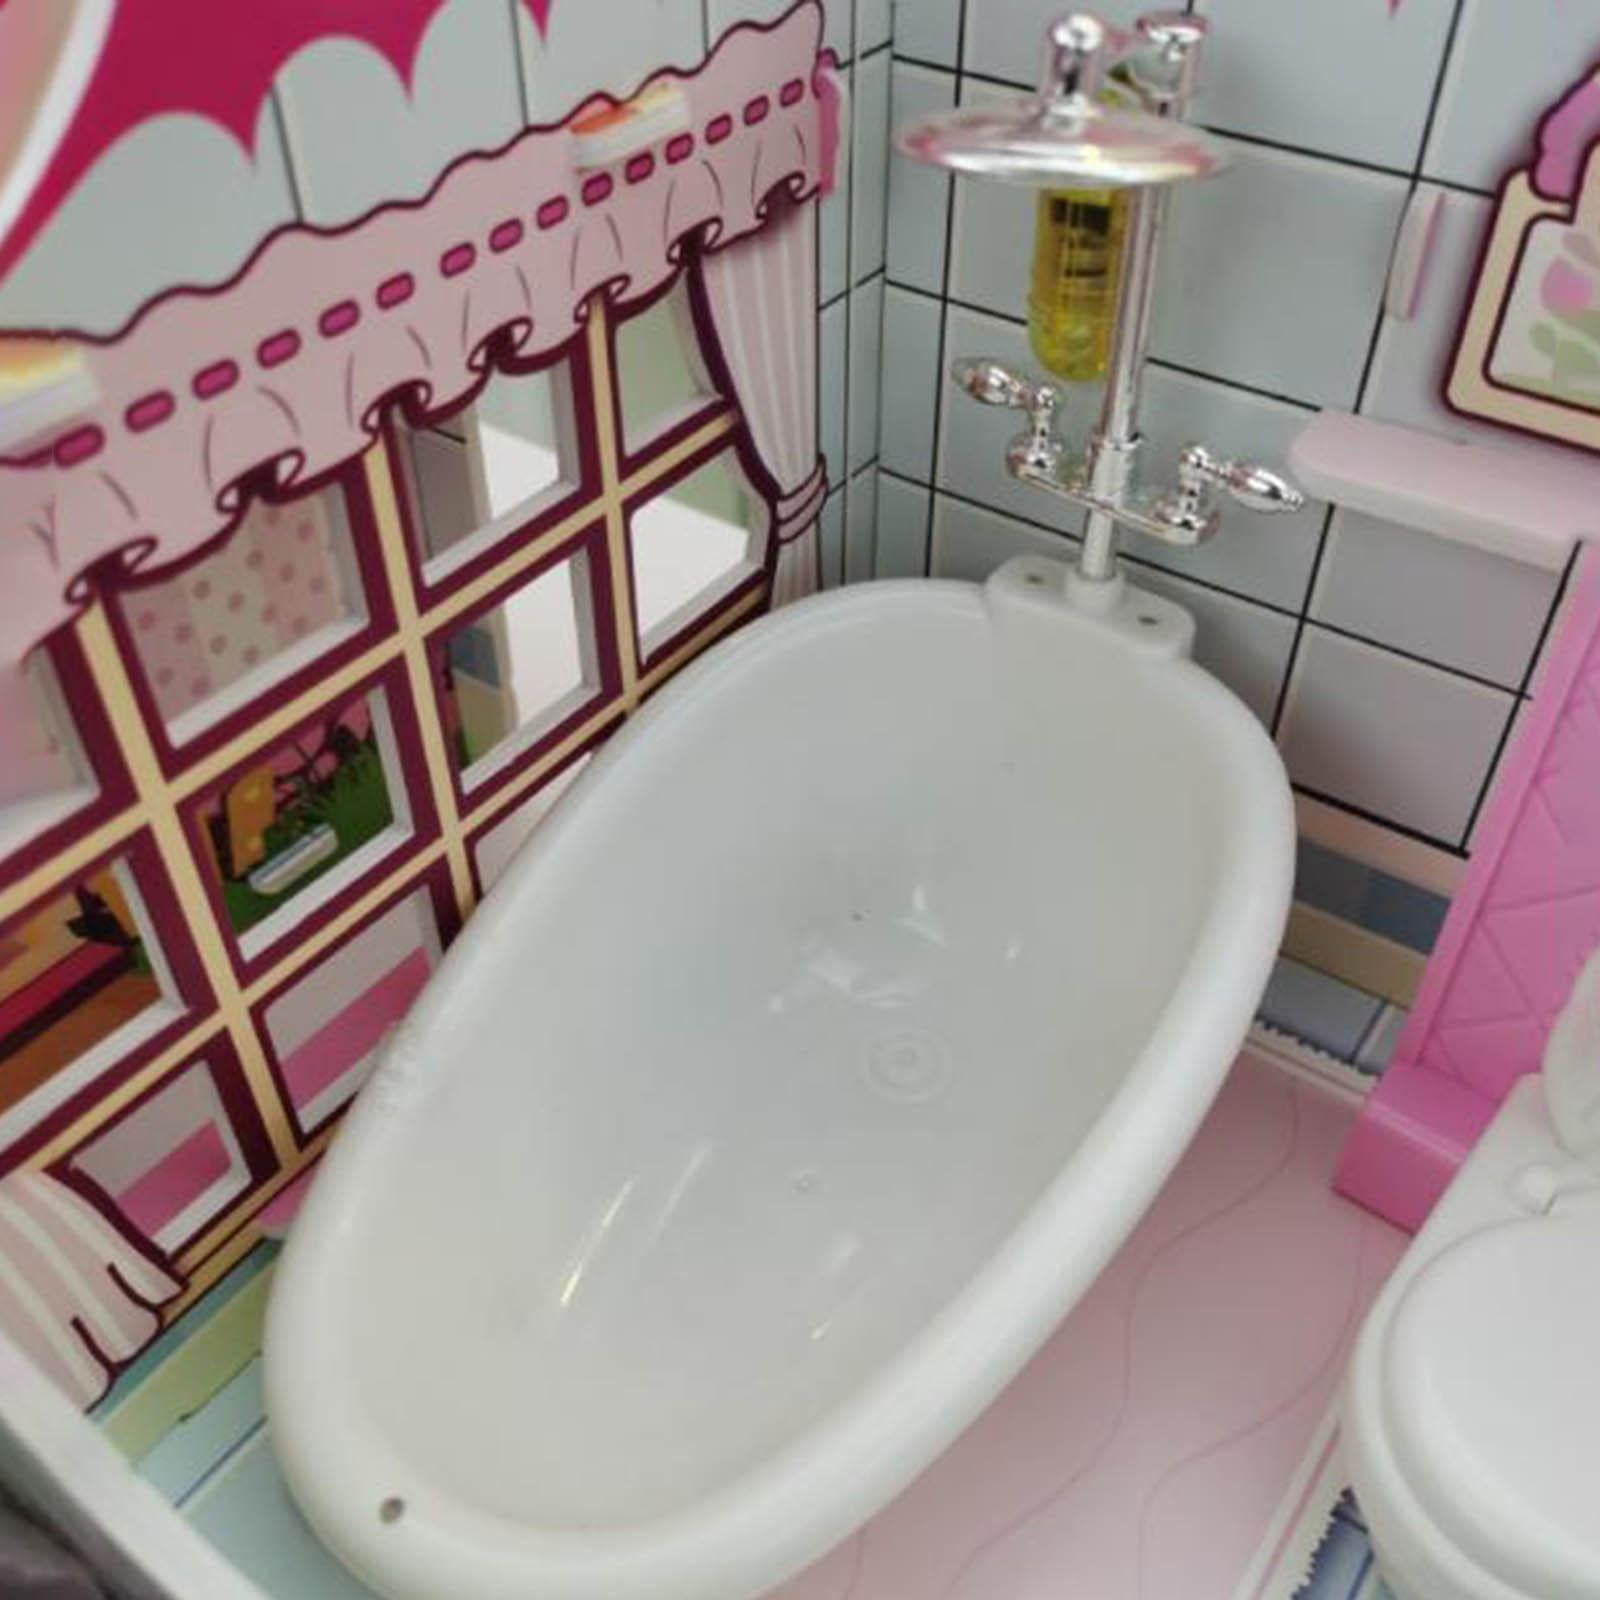 Dollhouse bathroom in progress! 🚽🪠 : r/miniatures